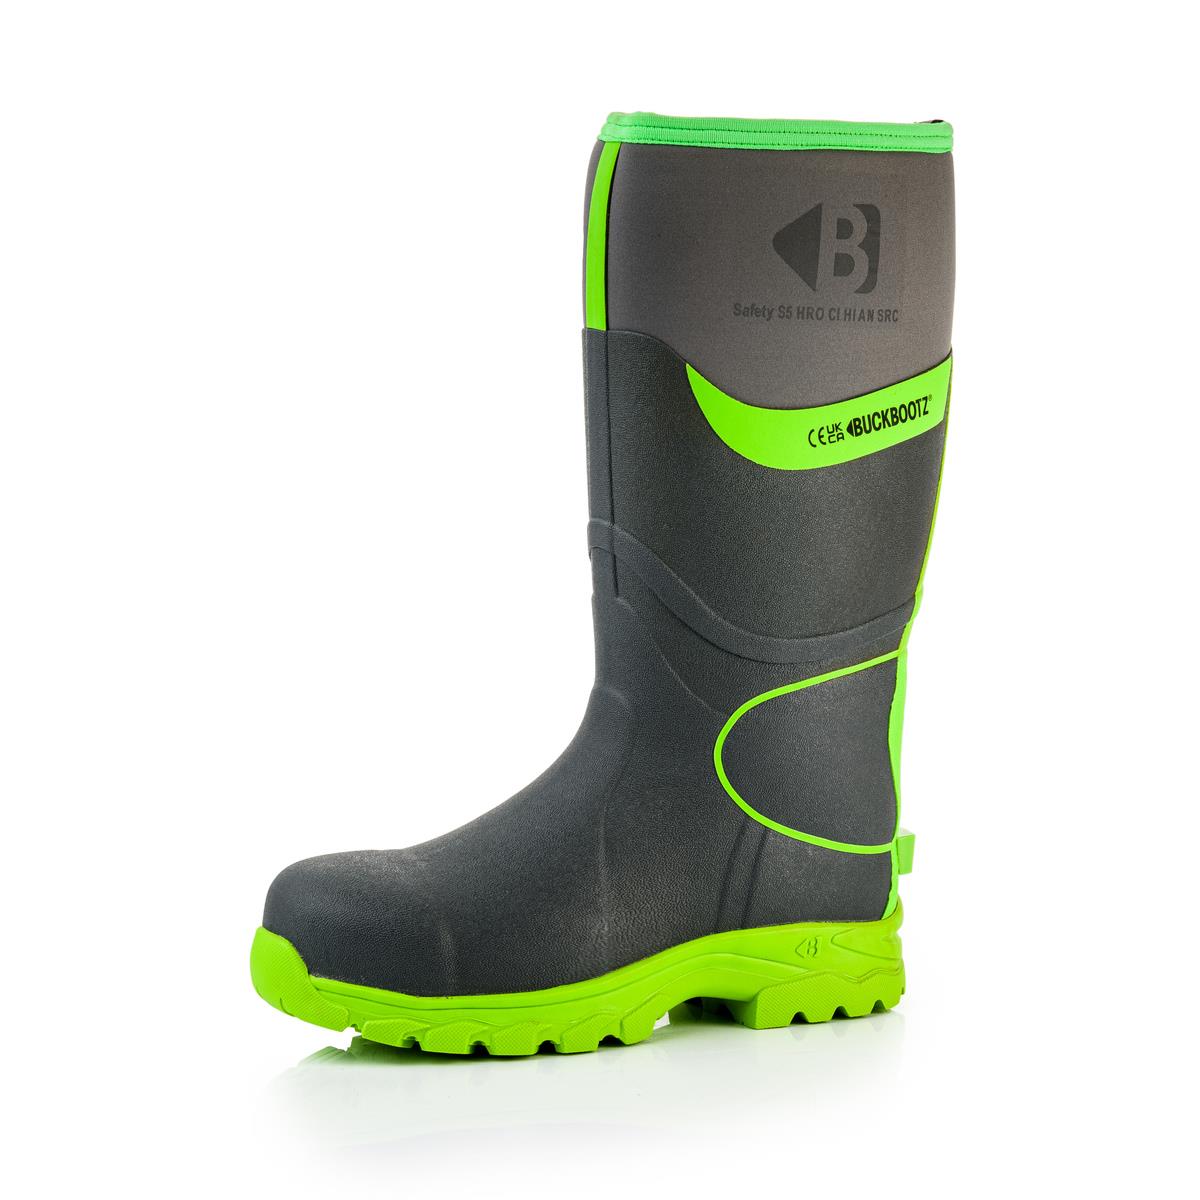 Buckbootz S5 grey/green composite toe/midsole safety wellington boot #BBZ8000